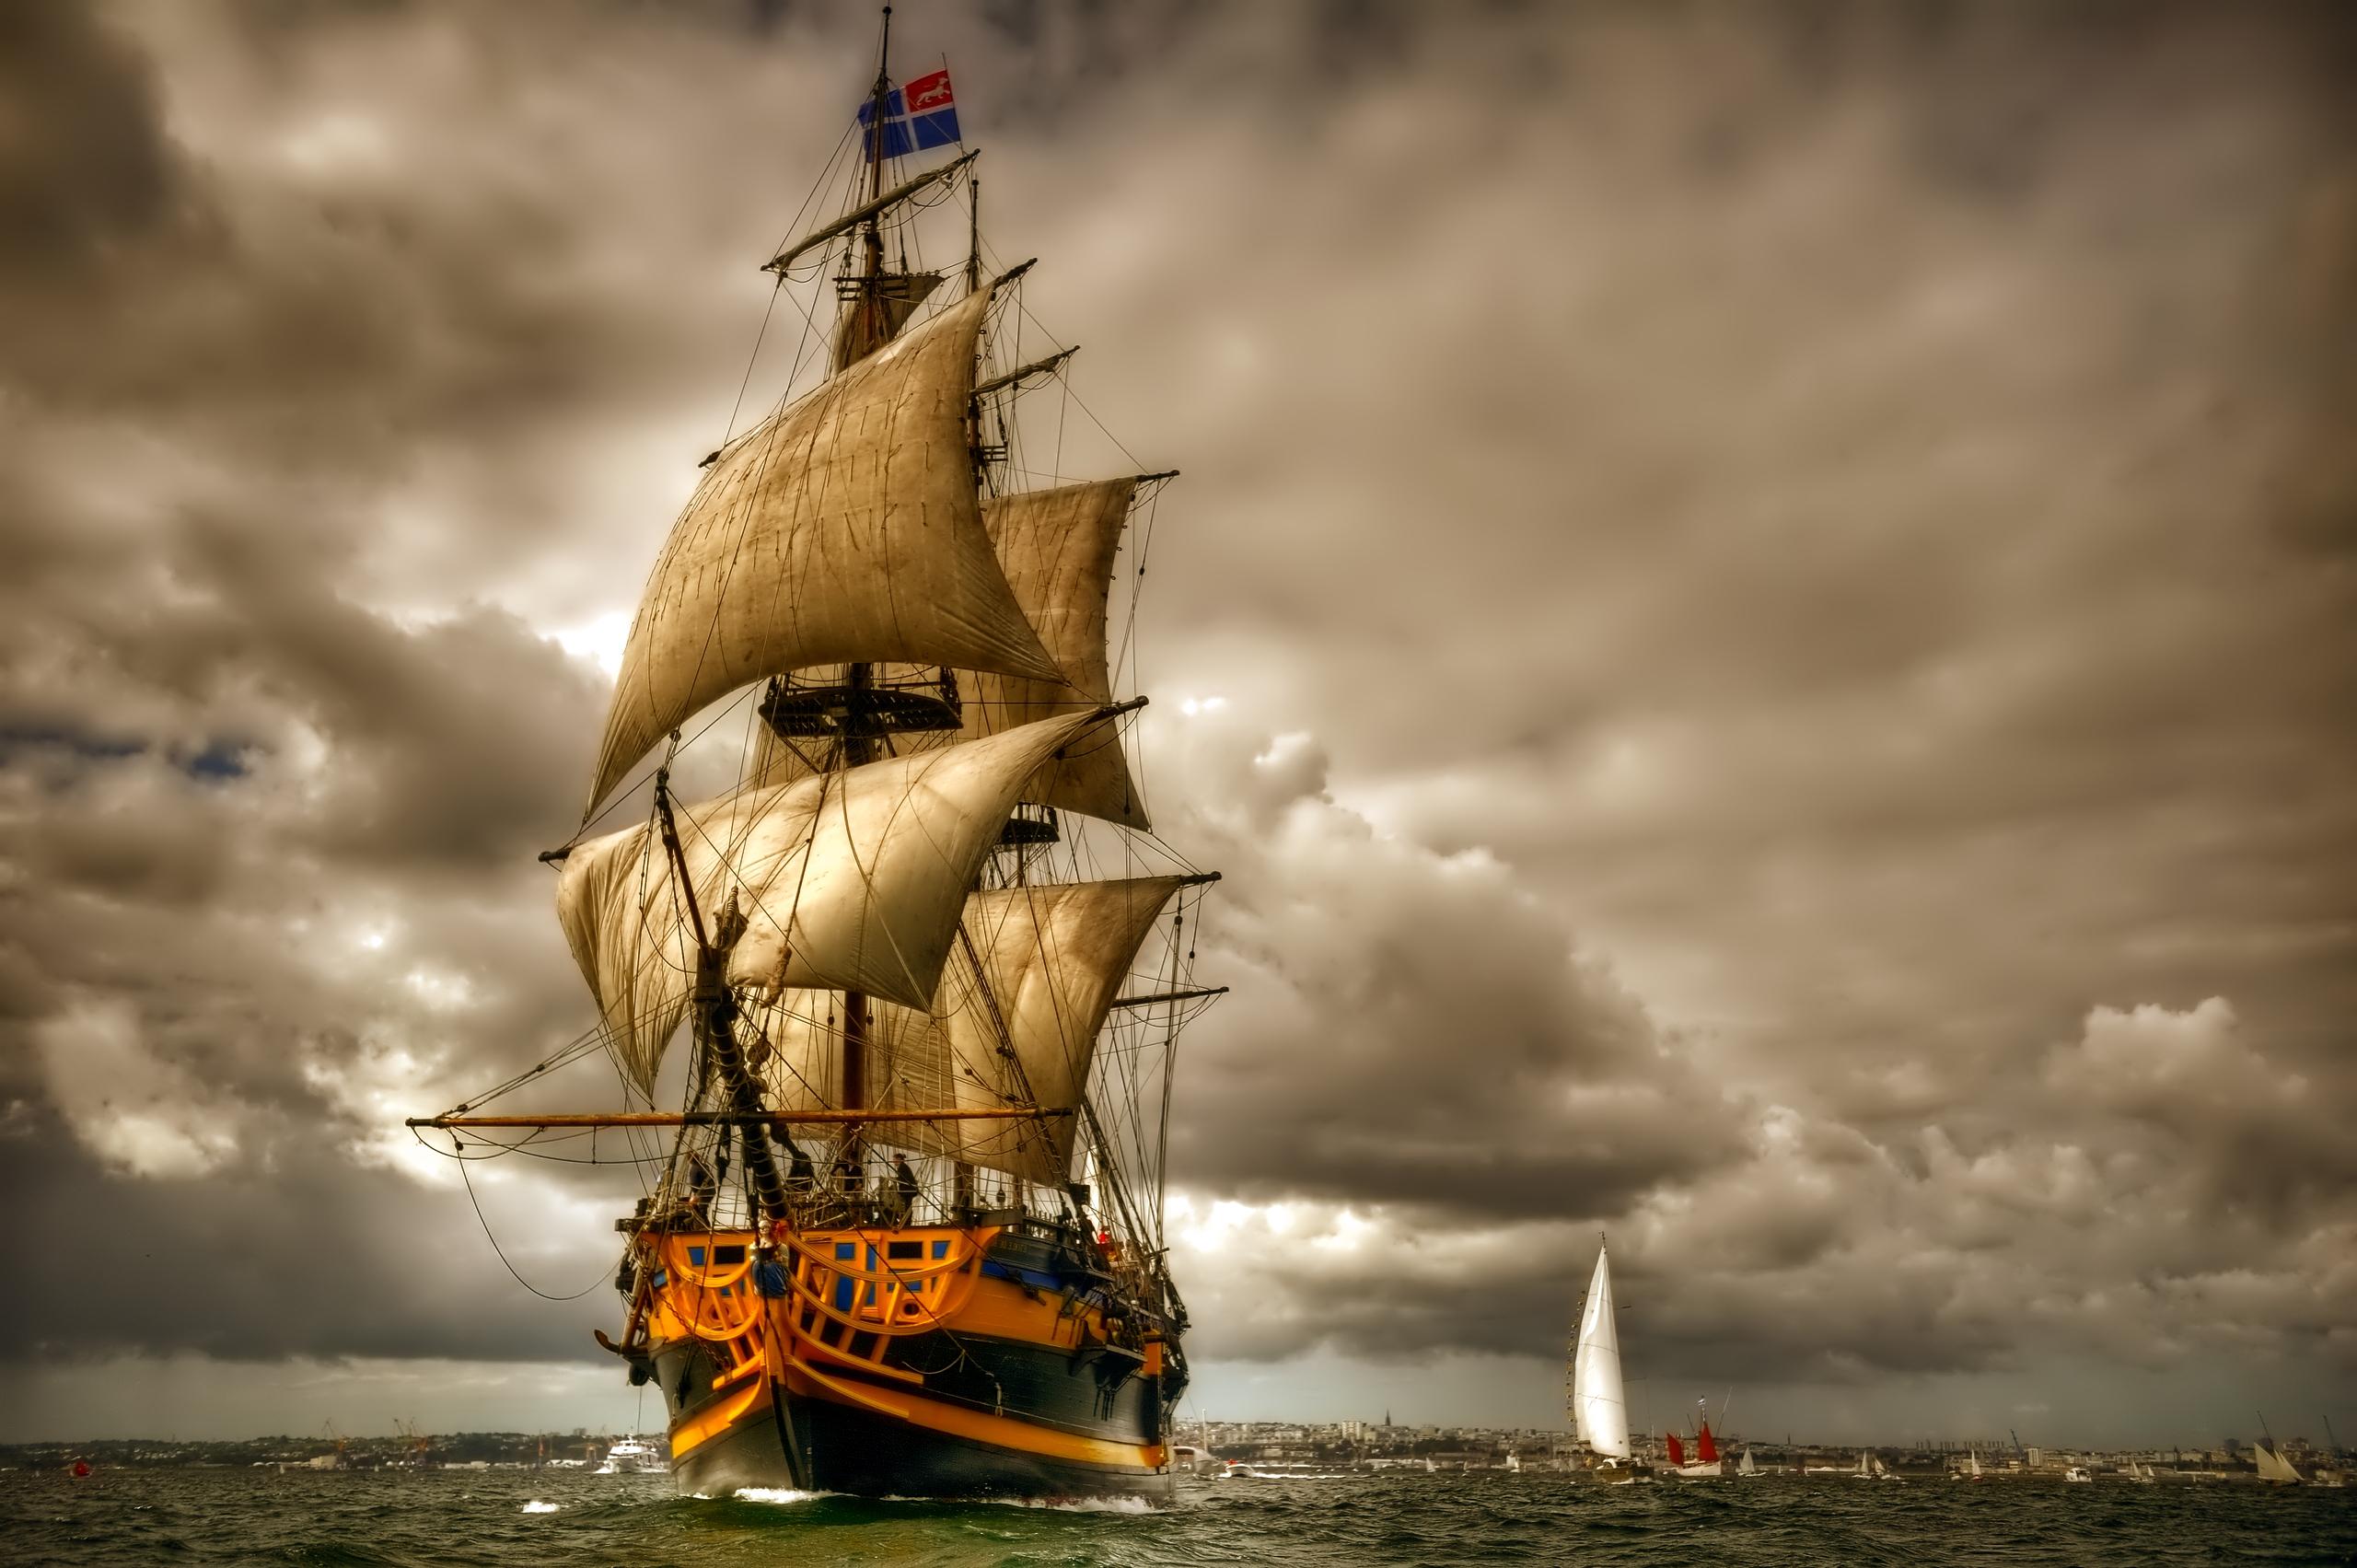 HD Sailing Ship Wallpaper Background Image